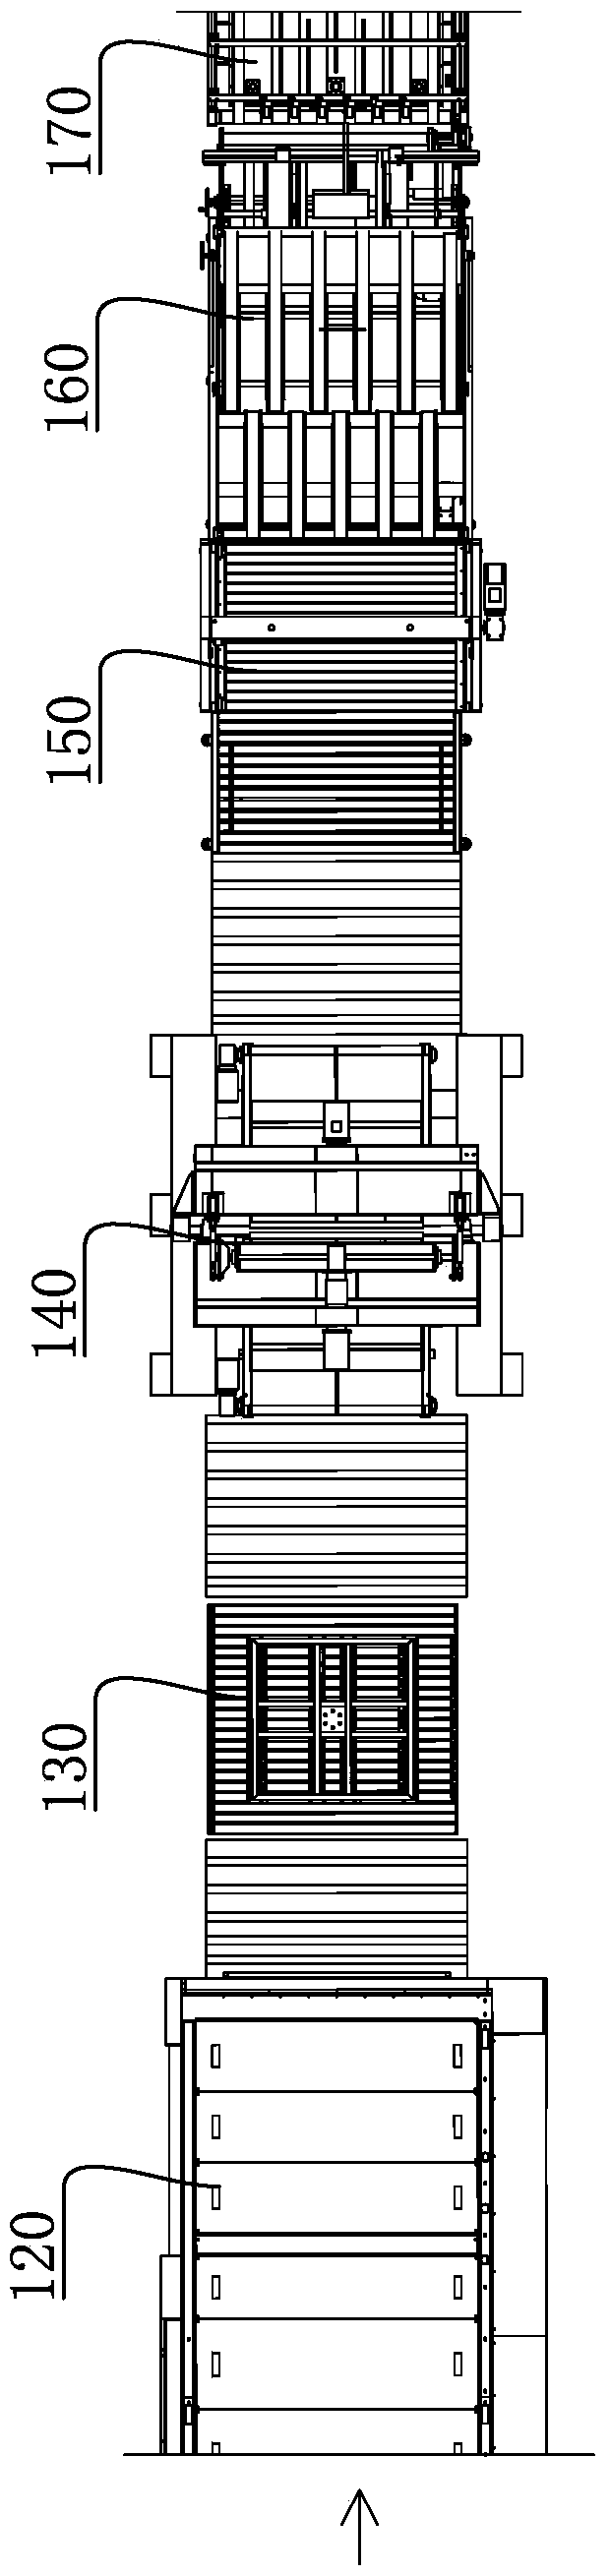 Corrugated box linkage production method and production line